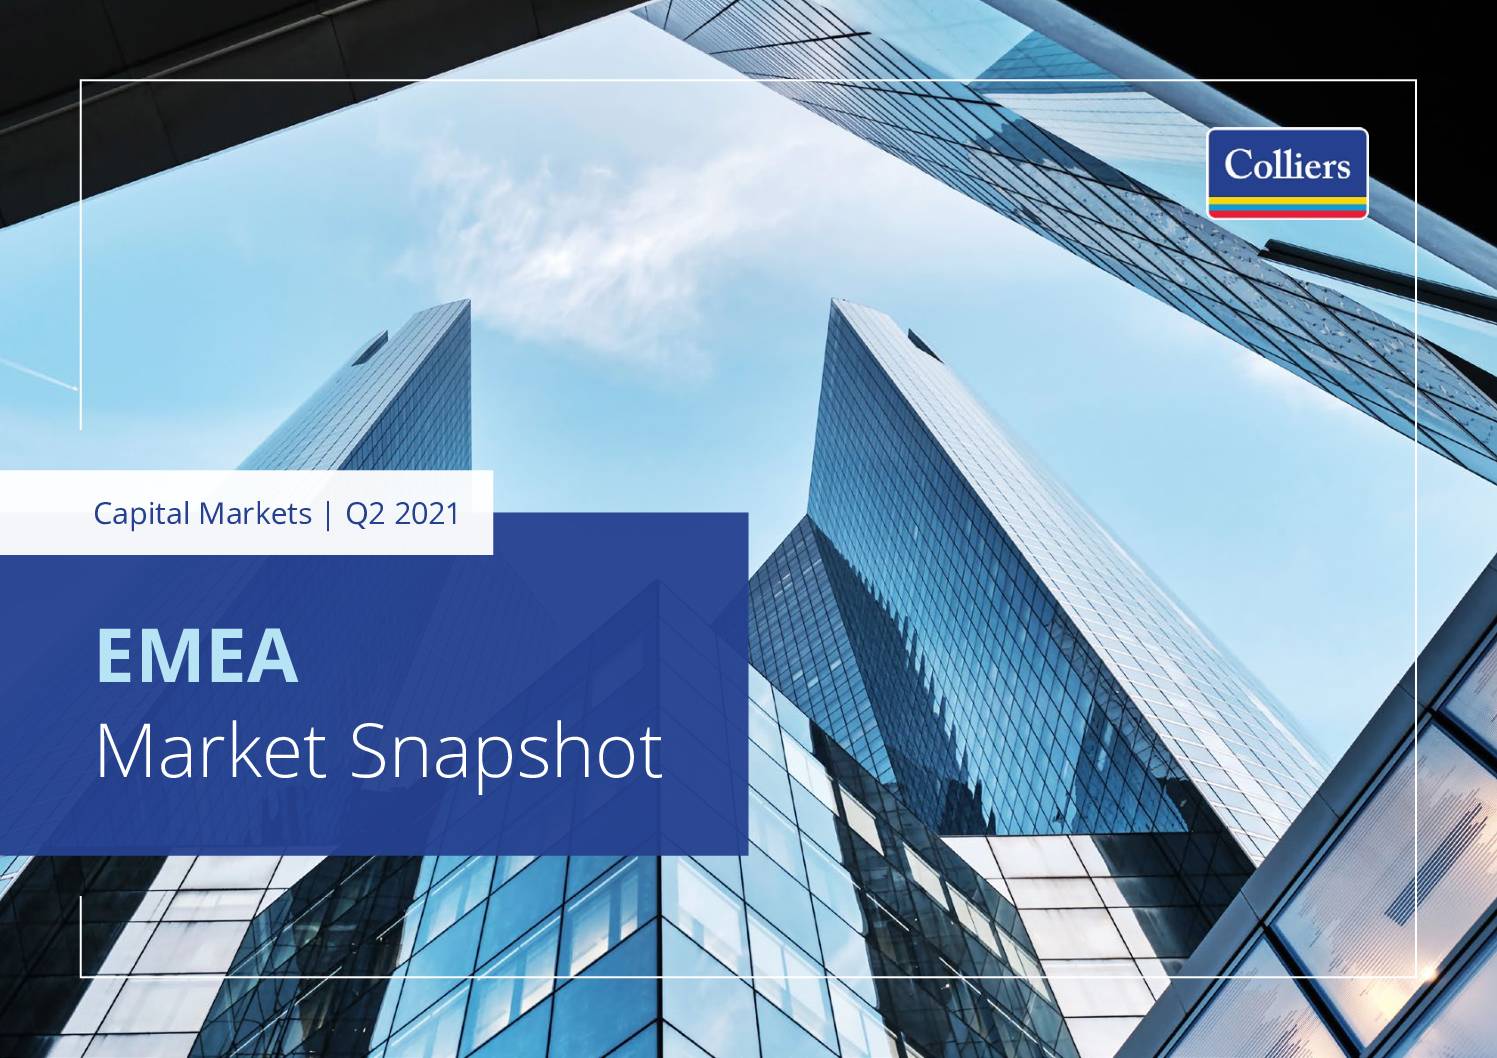 EMEA Markets Snapshot: Capital Markets: Q2 2021